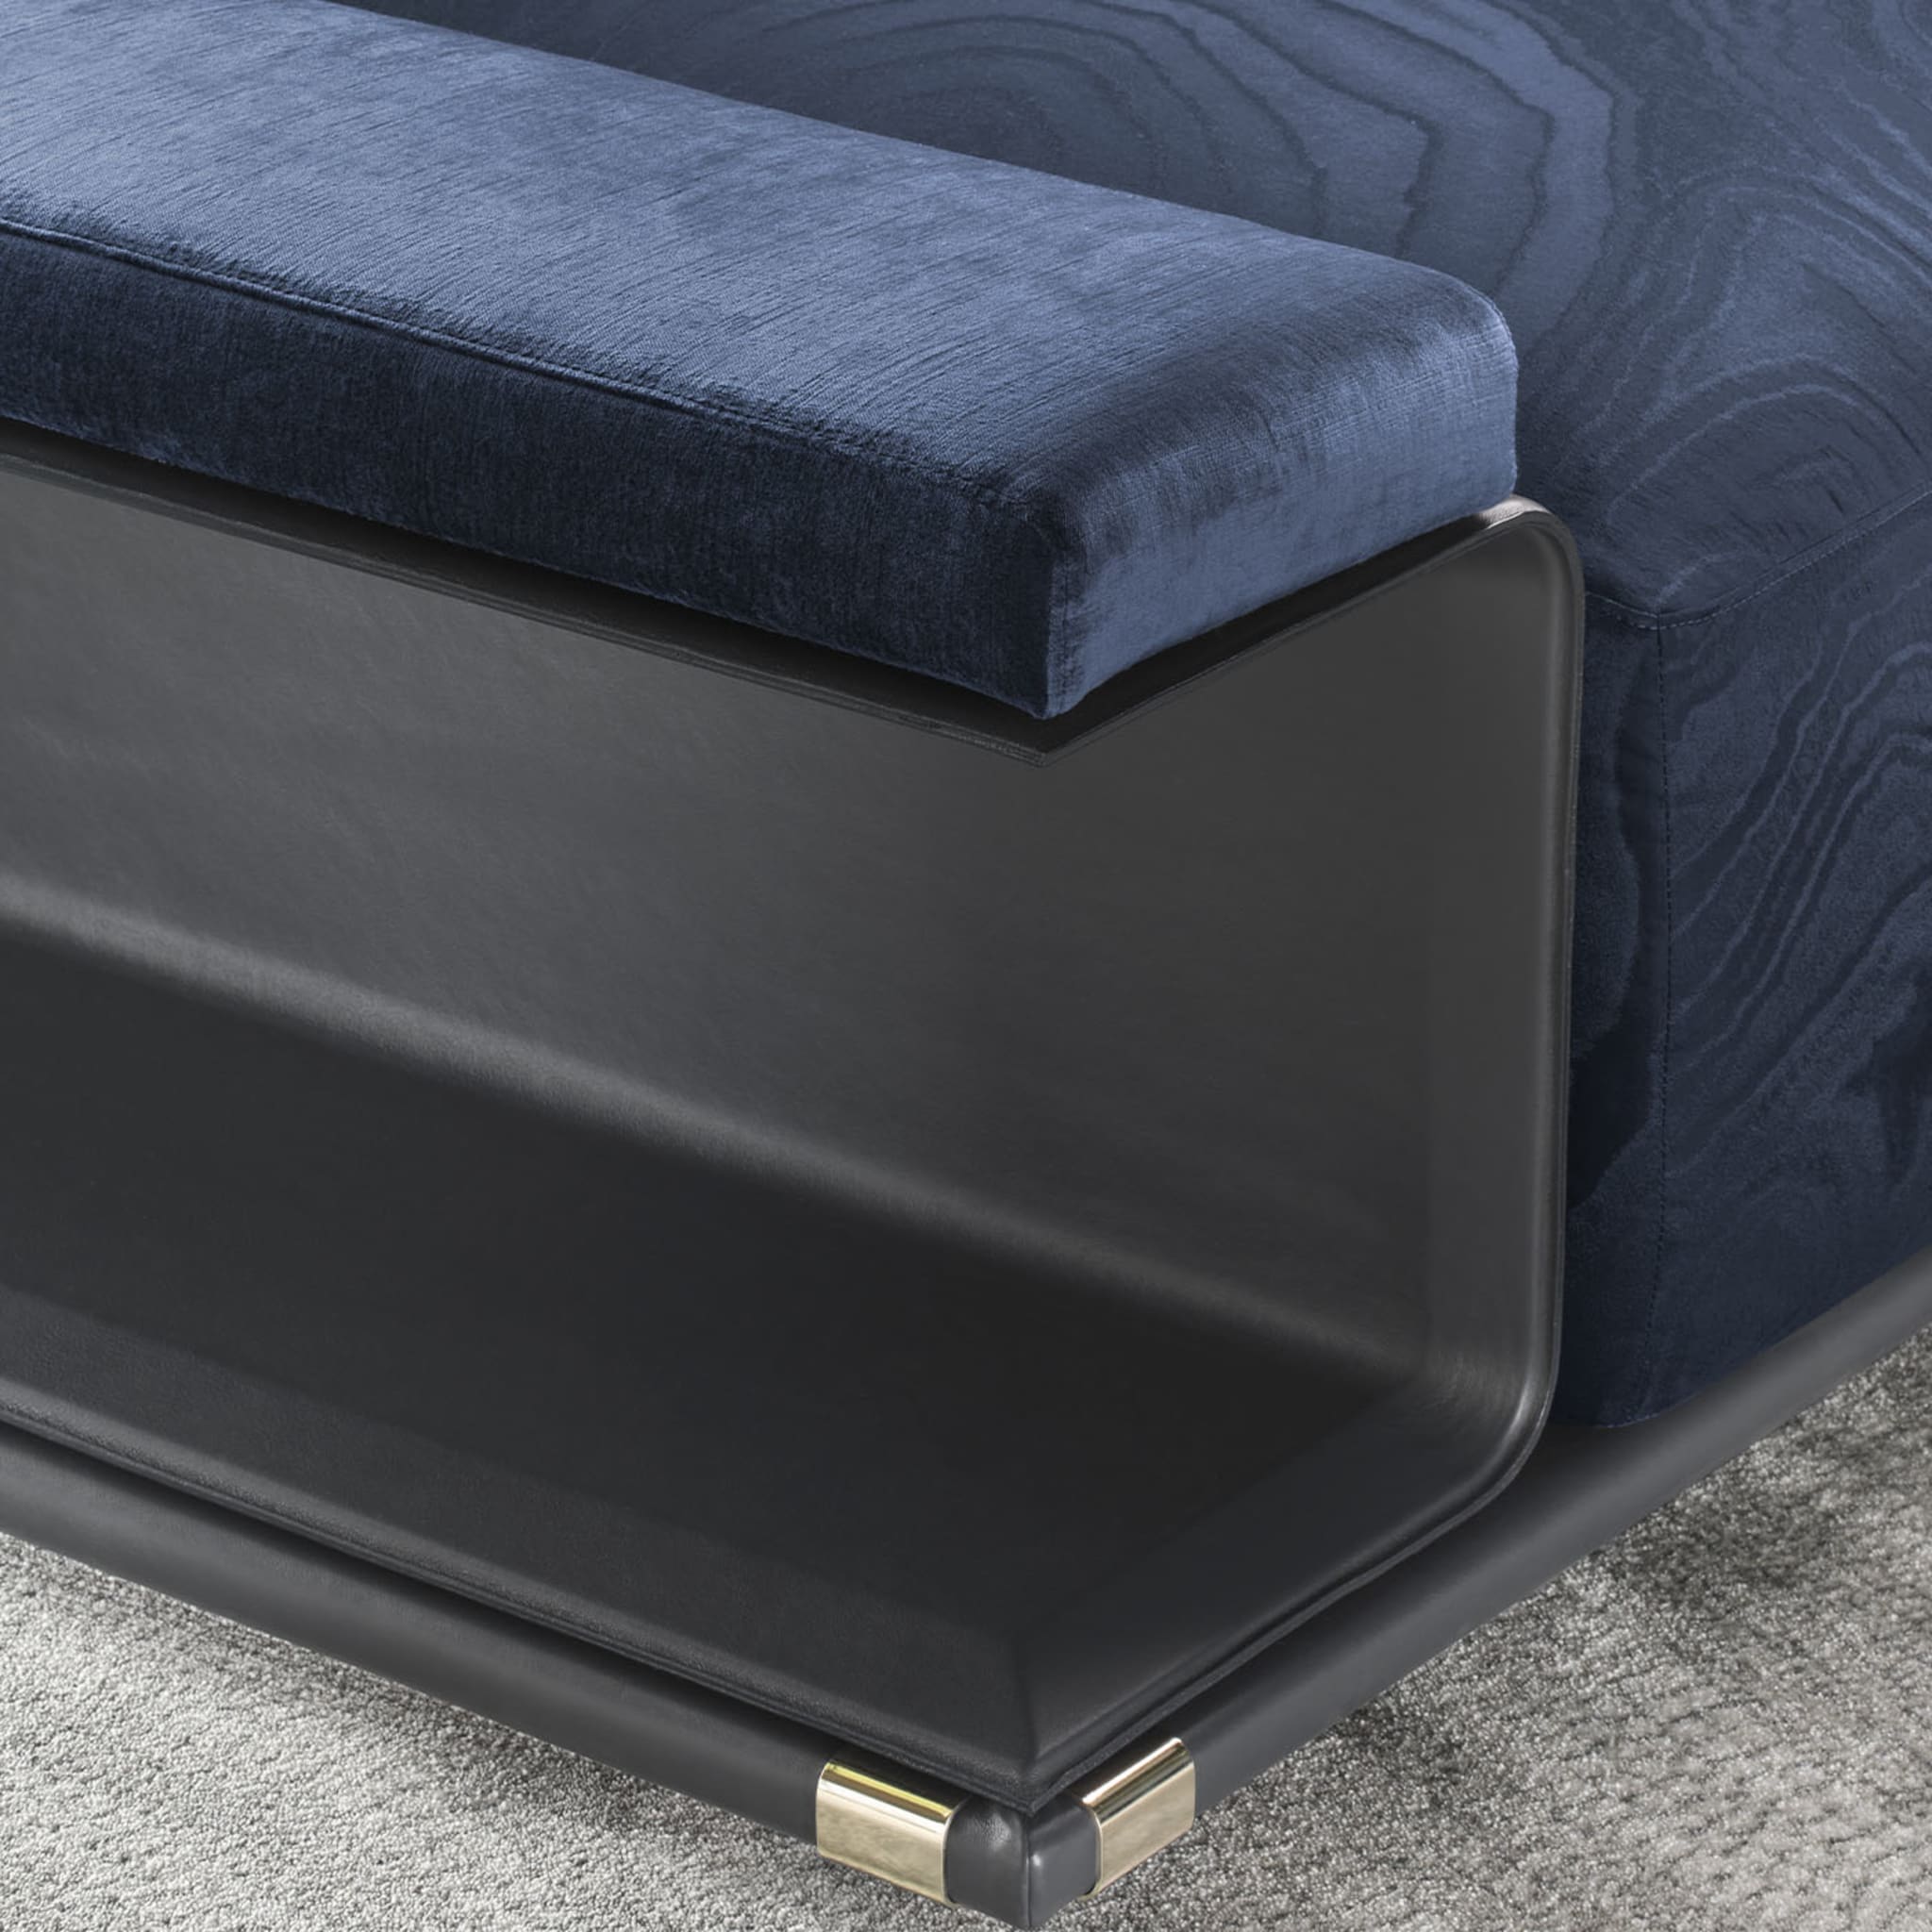 Zeno Modular Blue Sofa #1 - Alternative view 2